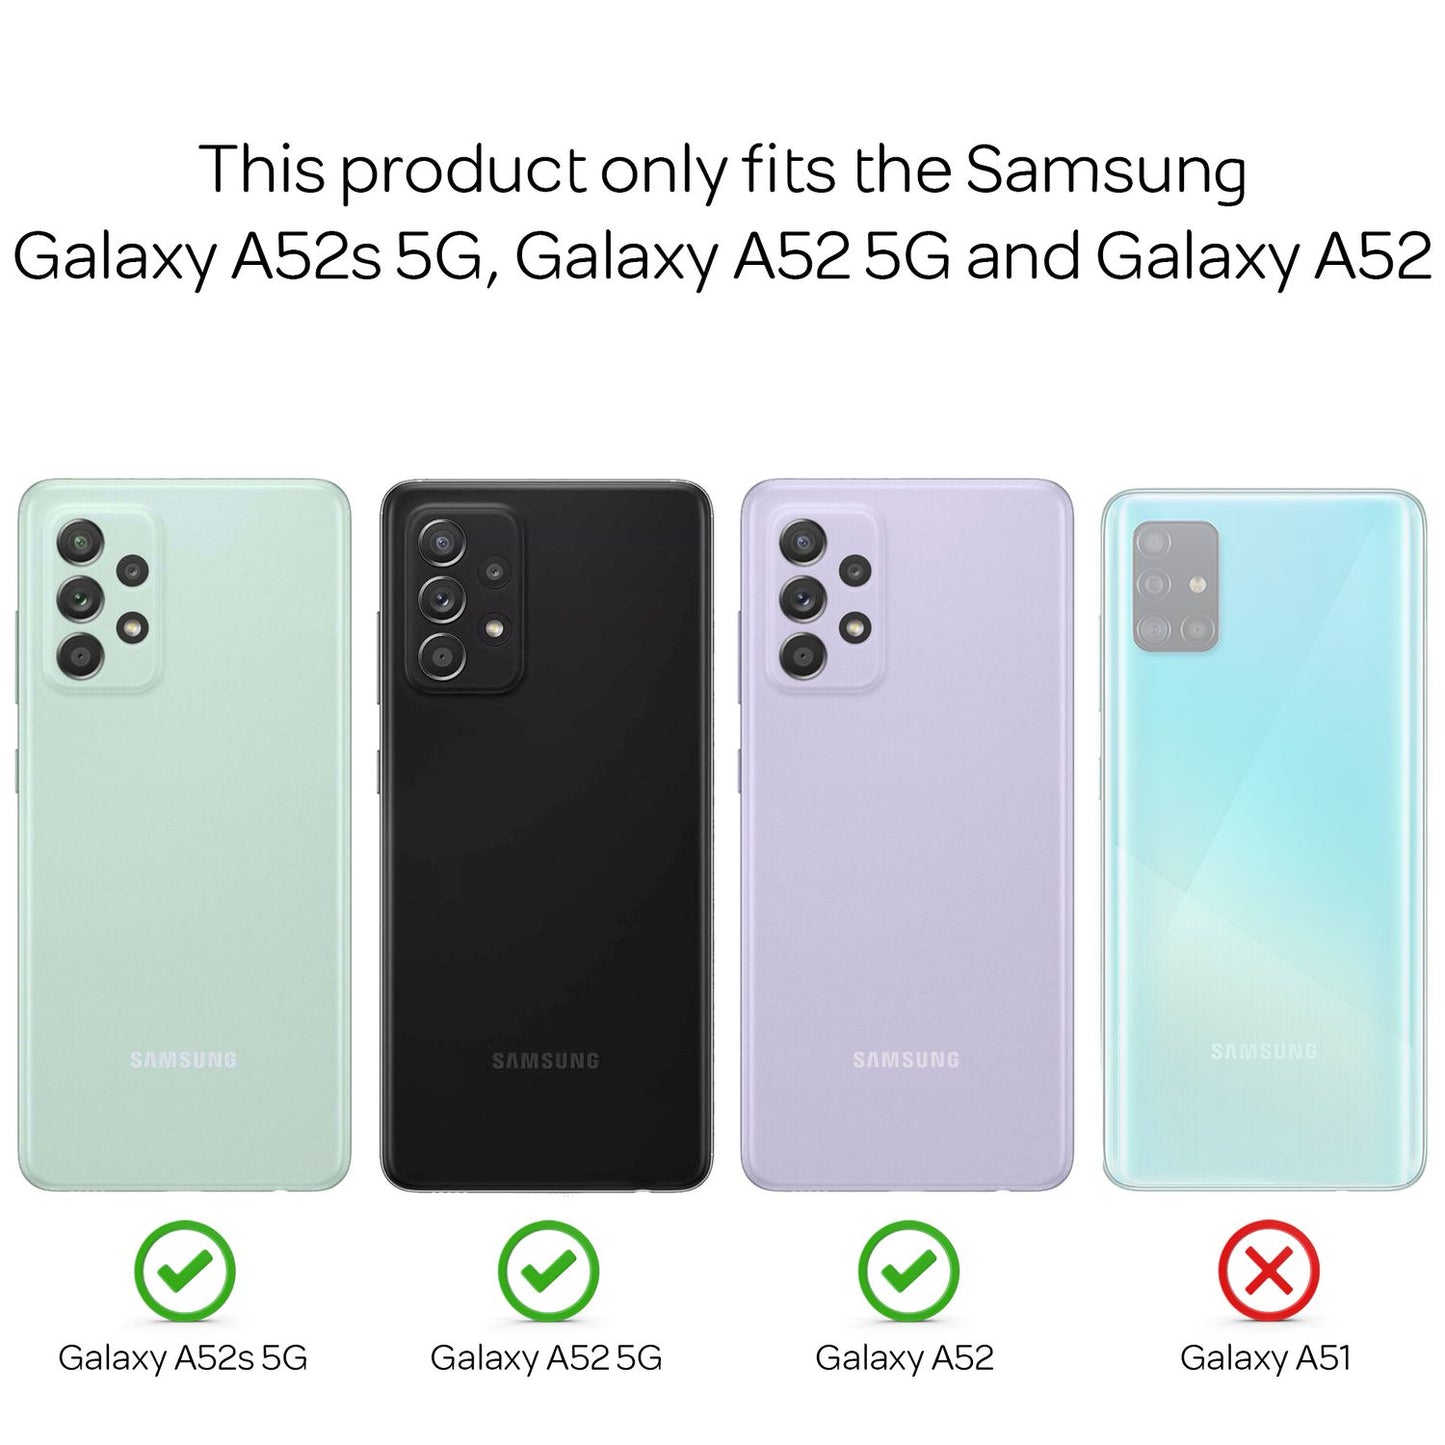 NALIA 360 Grad Handy Hülle für Galaxy A52 5G / A52, Transparent Full Cover Case